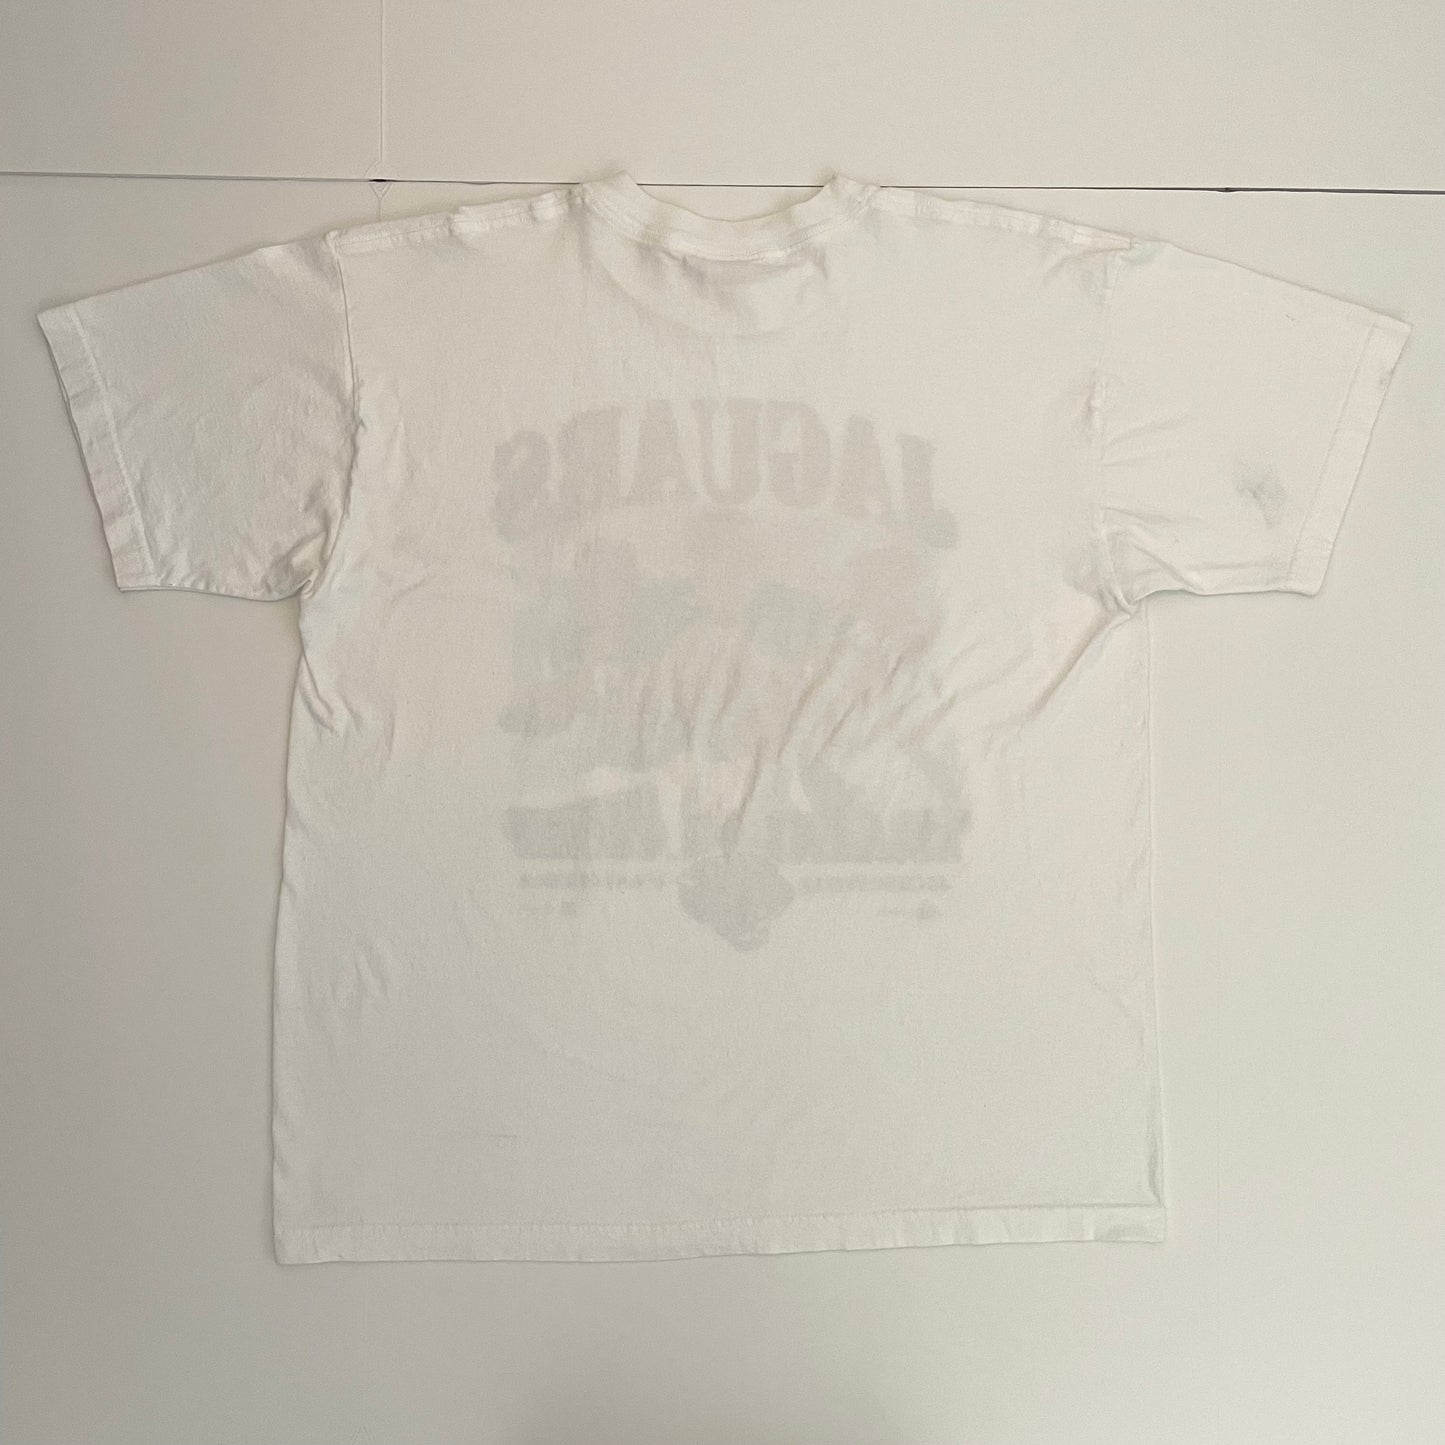 Vintage Jacksonville Jaguars 1999 Training Camp shirt size XL